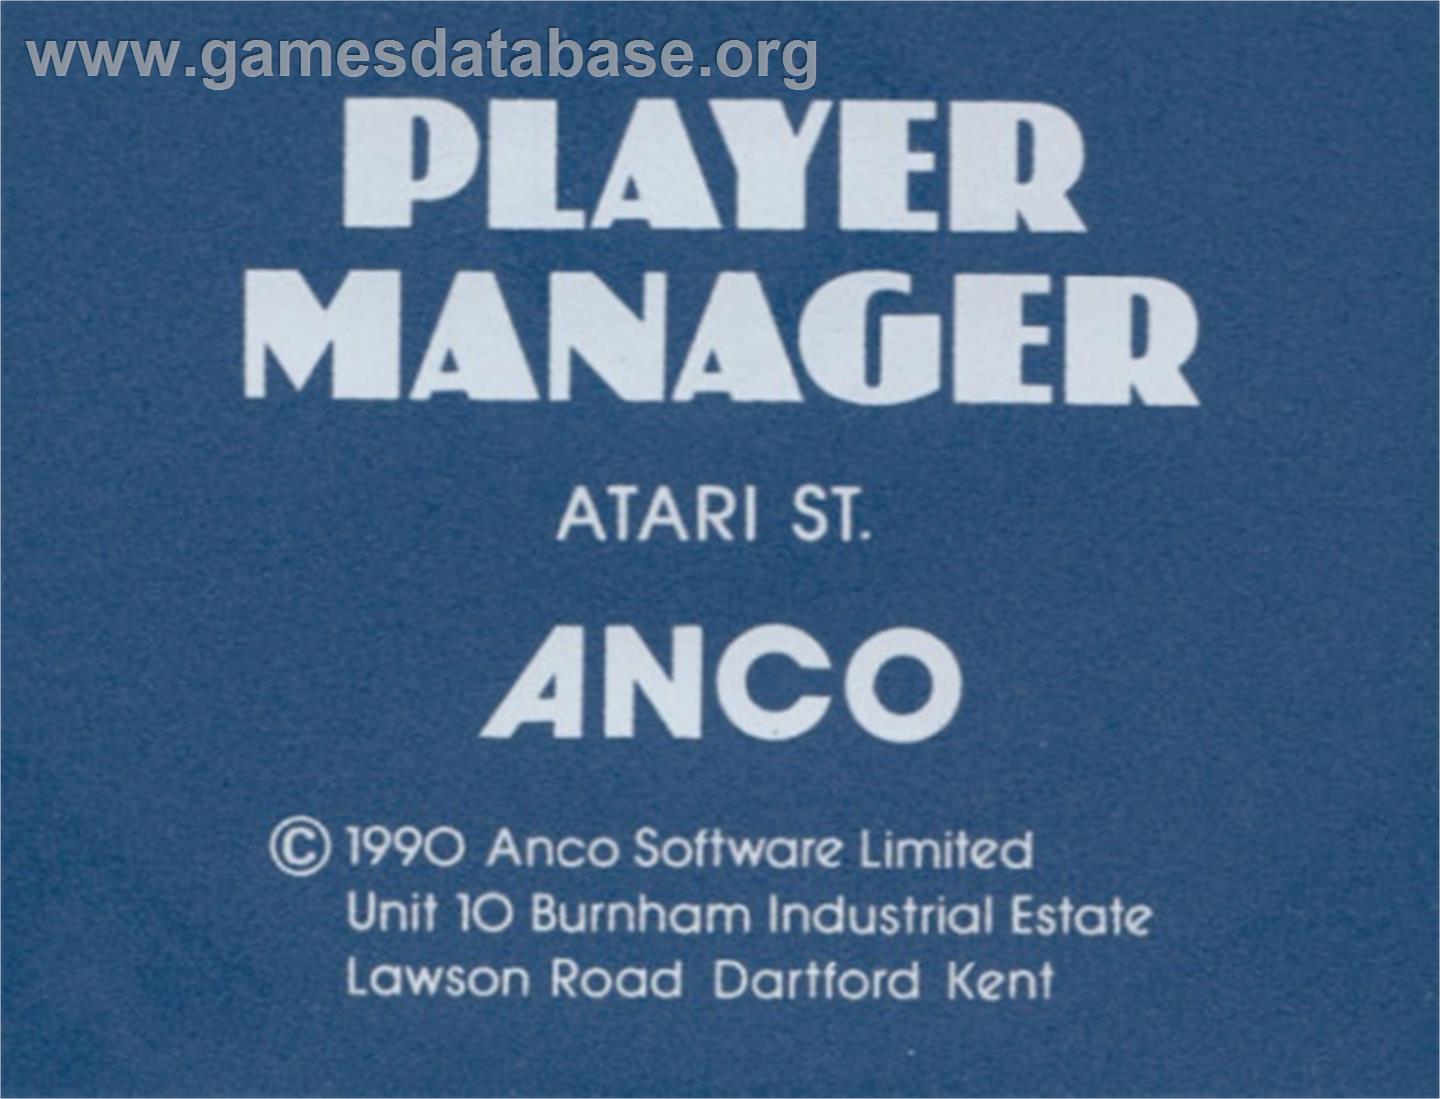 Player Manager - Atari ST - Artwork - Cartridge Top